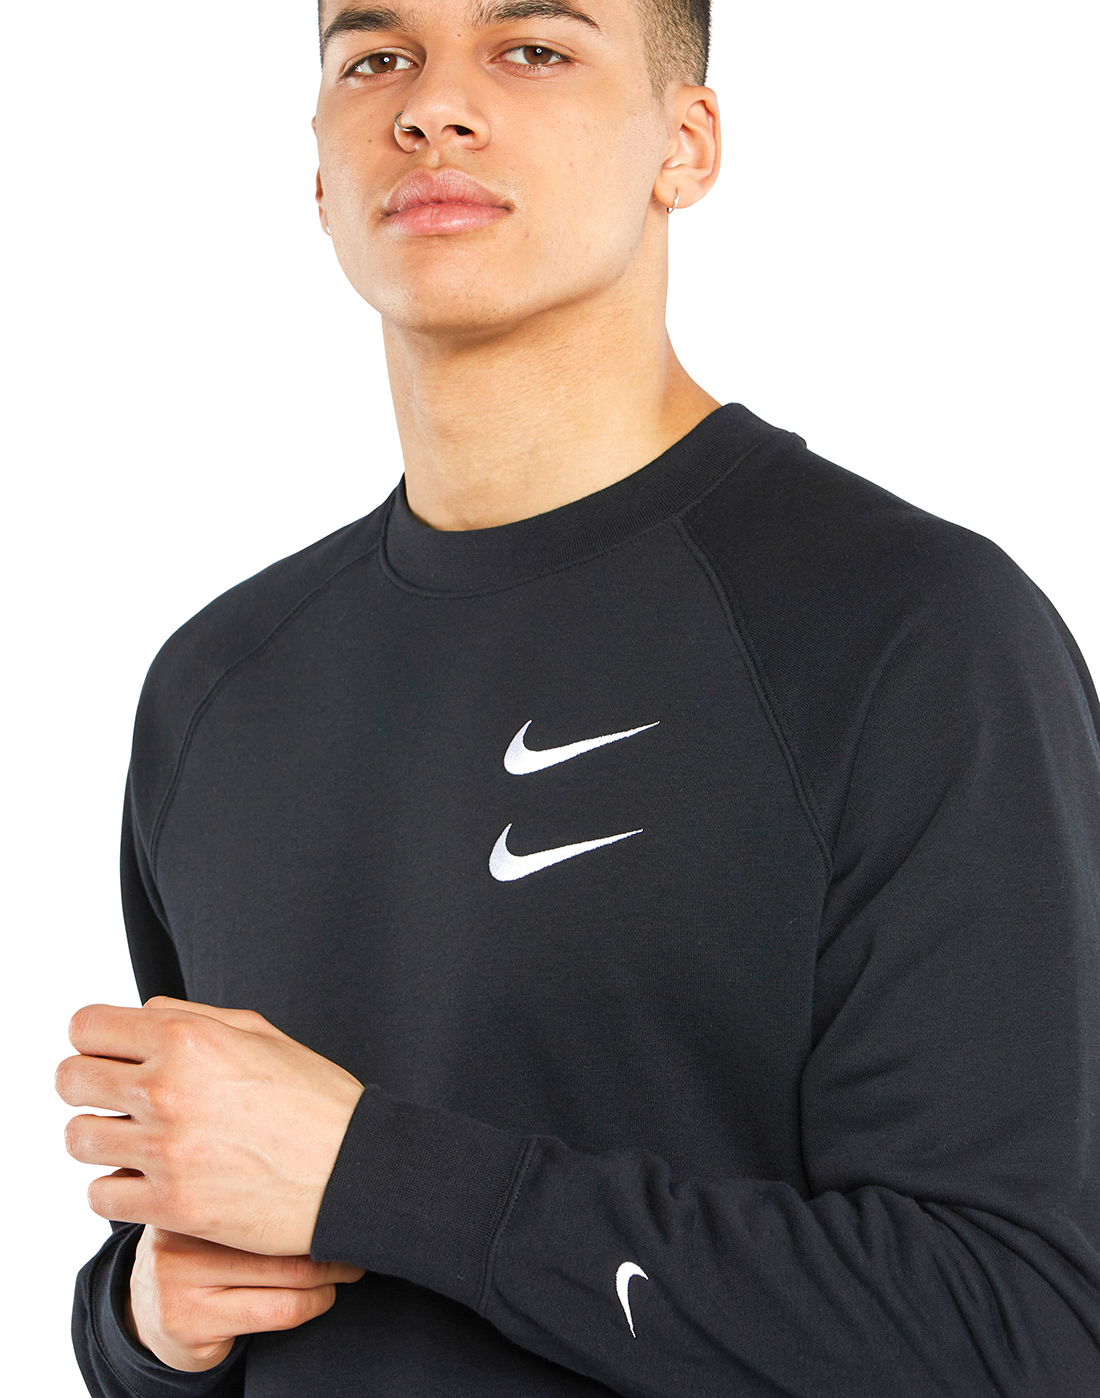 Download Nike Mens Swoosh Crew Neck Sweatshirt - Black | Life Style ...